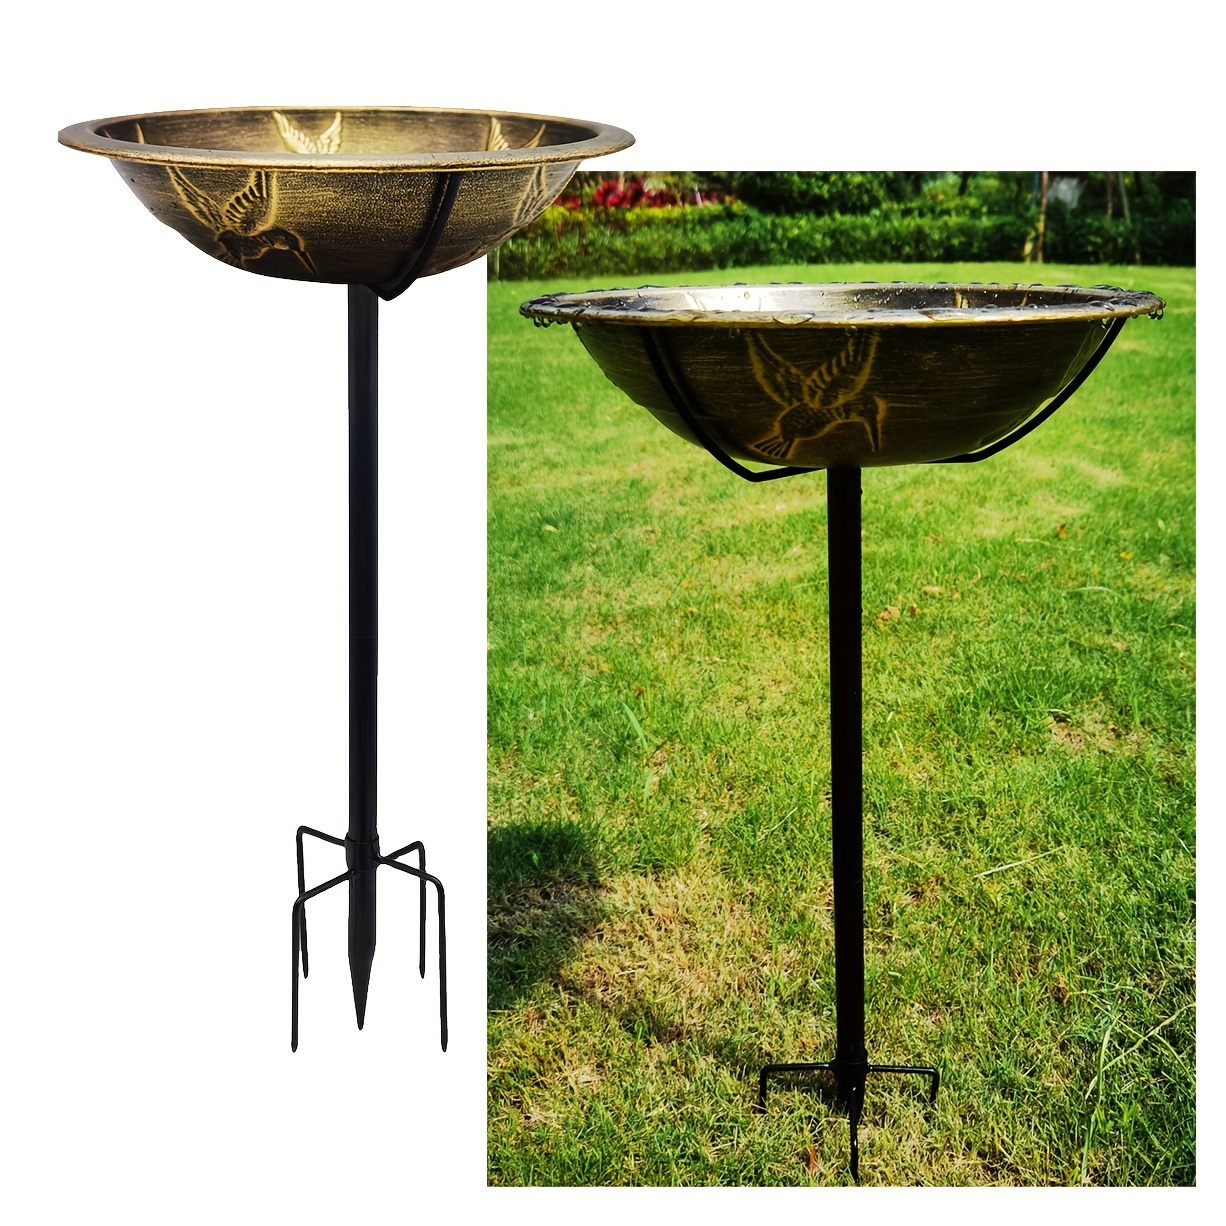 

Elegant Bronze Metal Bird Bath With Stand - 24.4" Tall, 12.8" Diameter - Perfect For Garden Decor & Bird Feeding Station